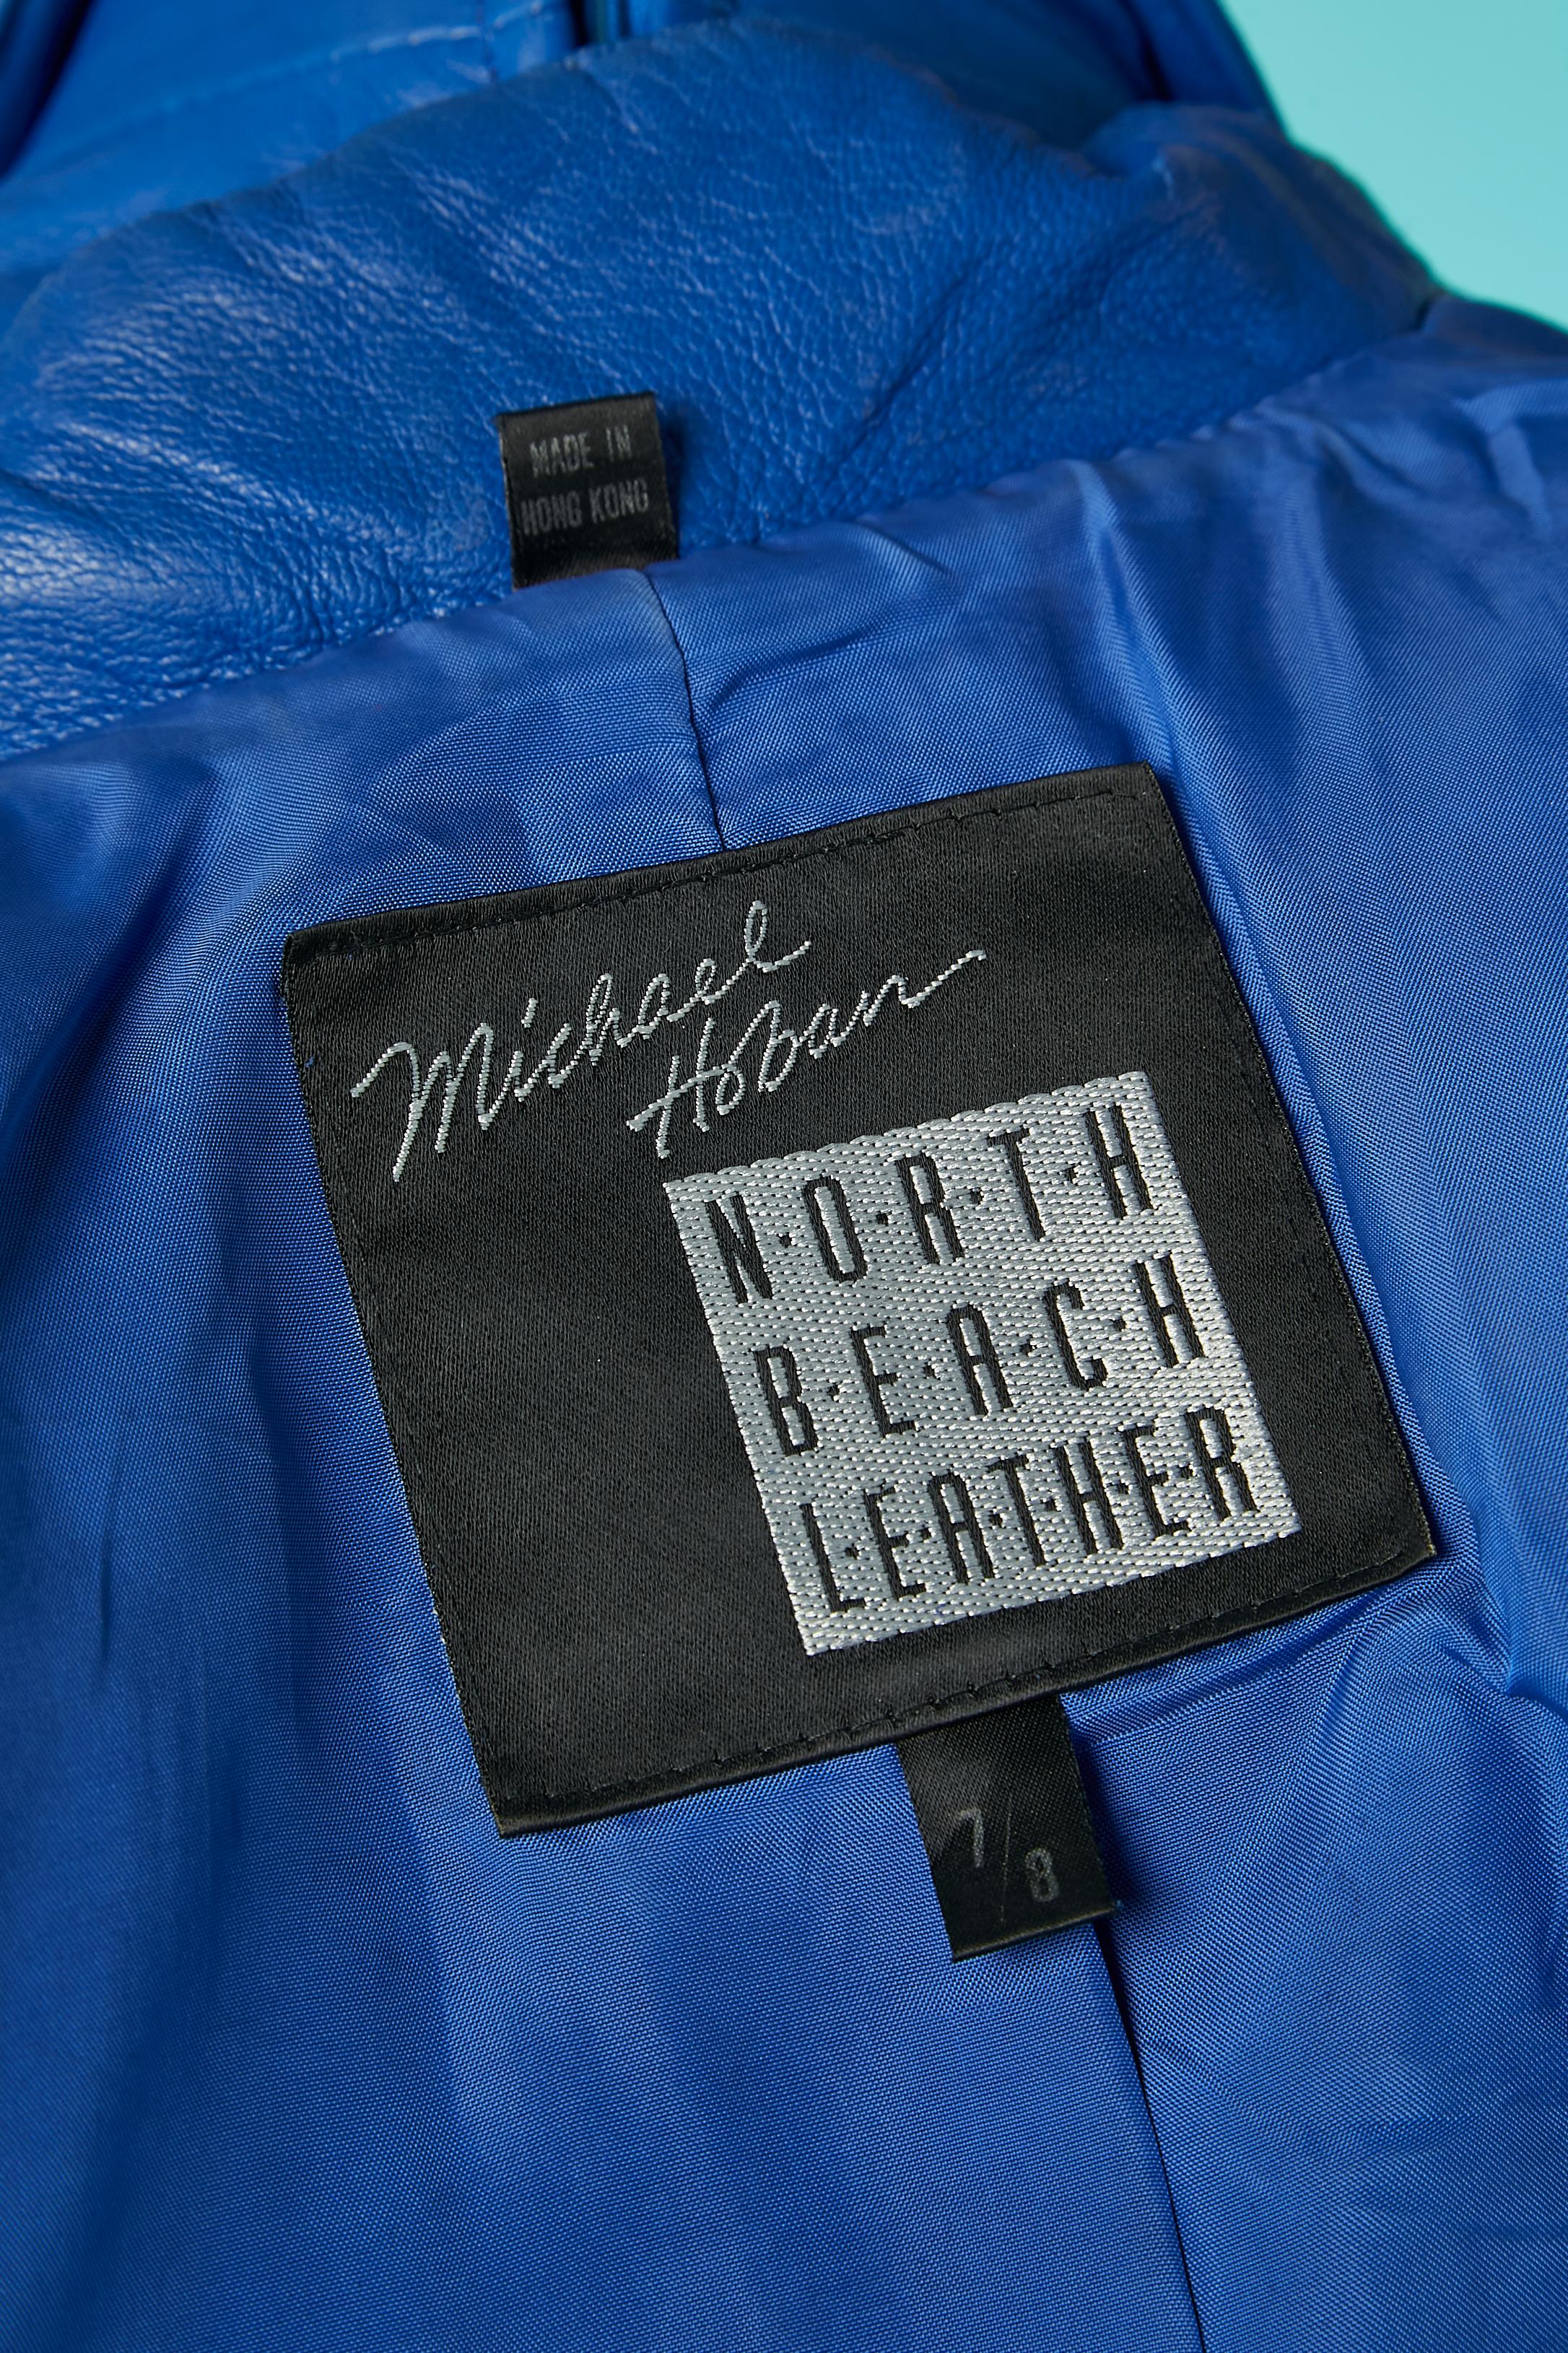 Blue boléro and sleeveless dress ensemble Michael Hoban North Beach Leather  For Sale 2